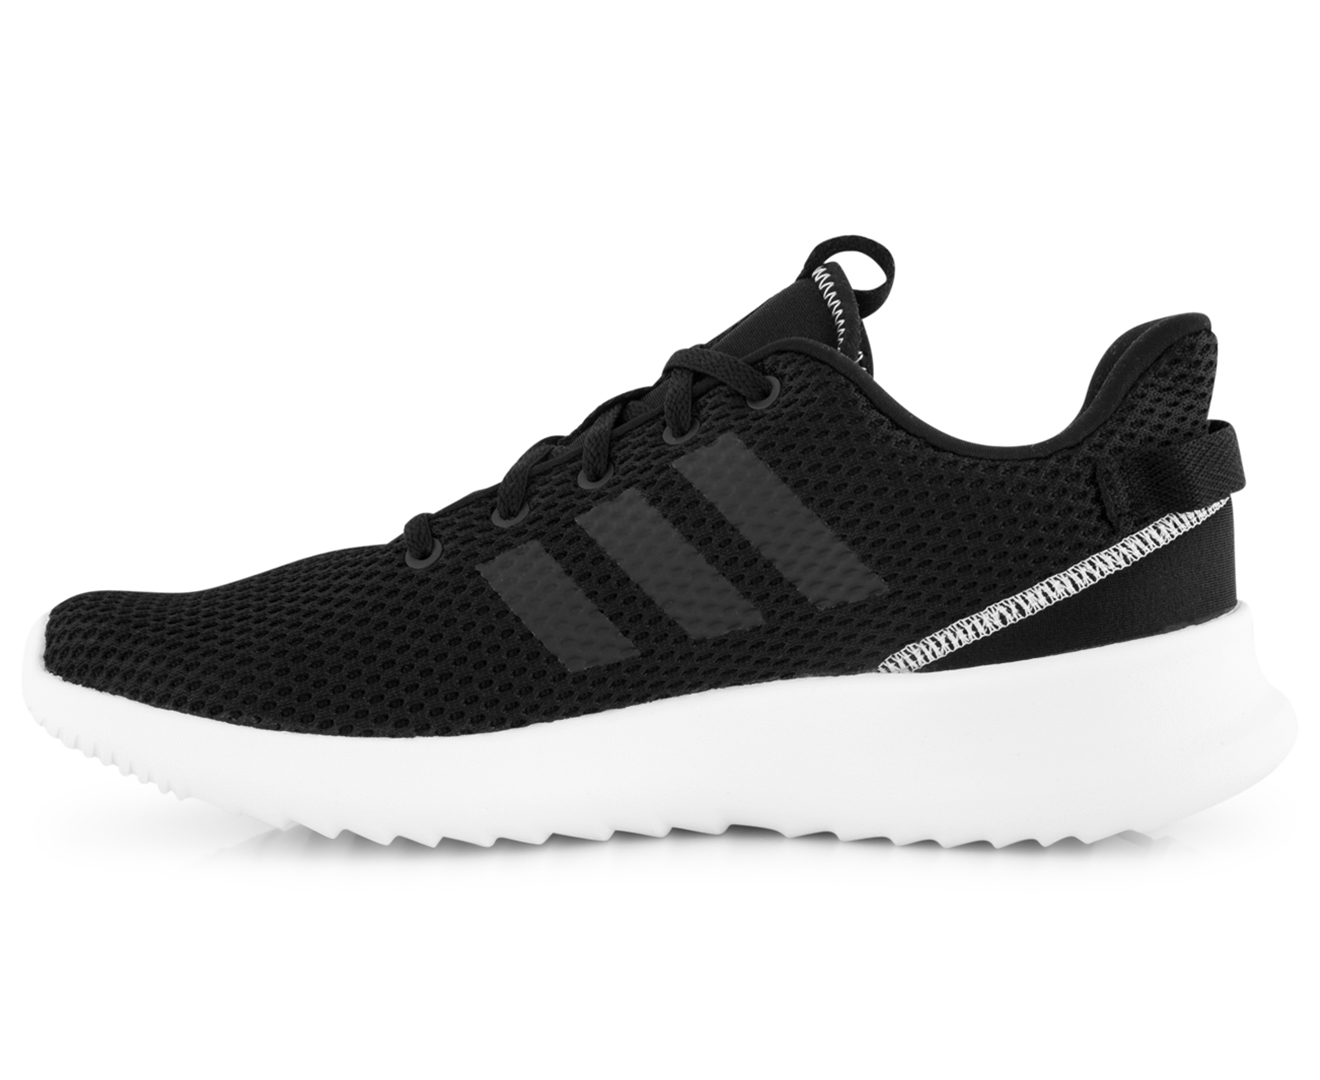 Adidas Women's Cloudfoam Racer TR Shoe - Core Black/Grey One | Catch.com.au